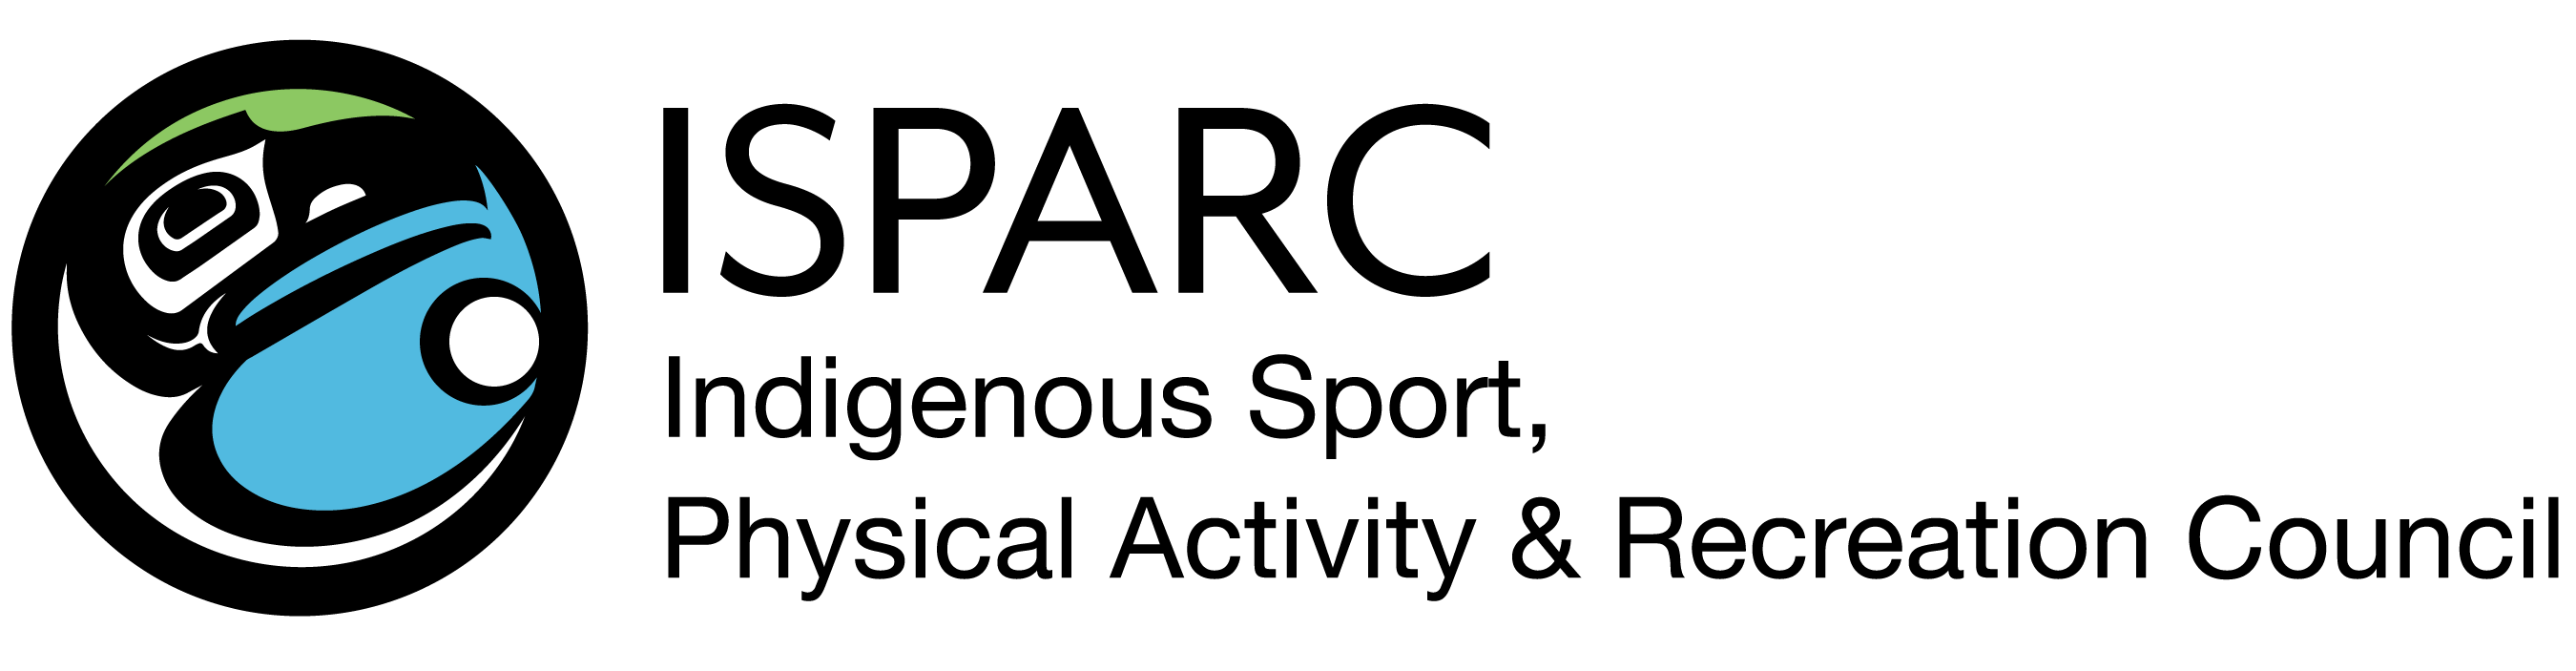 ISPARC logo